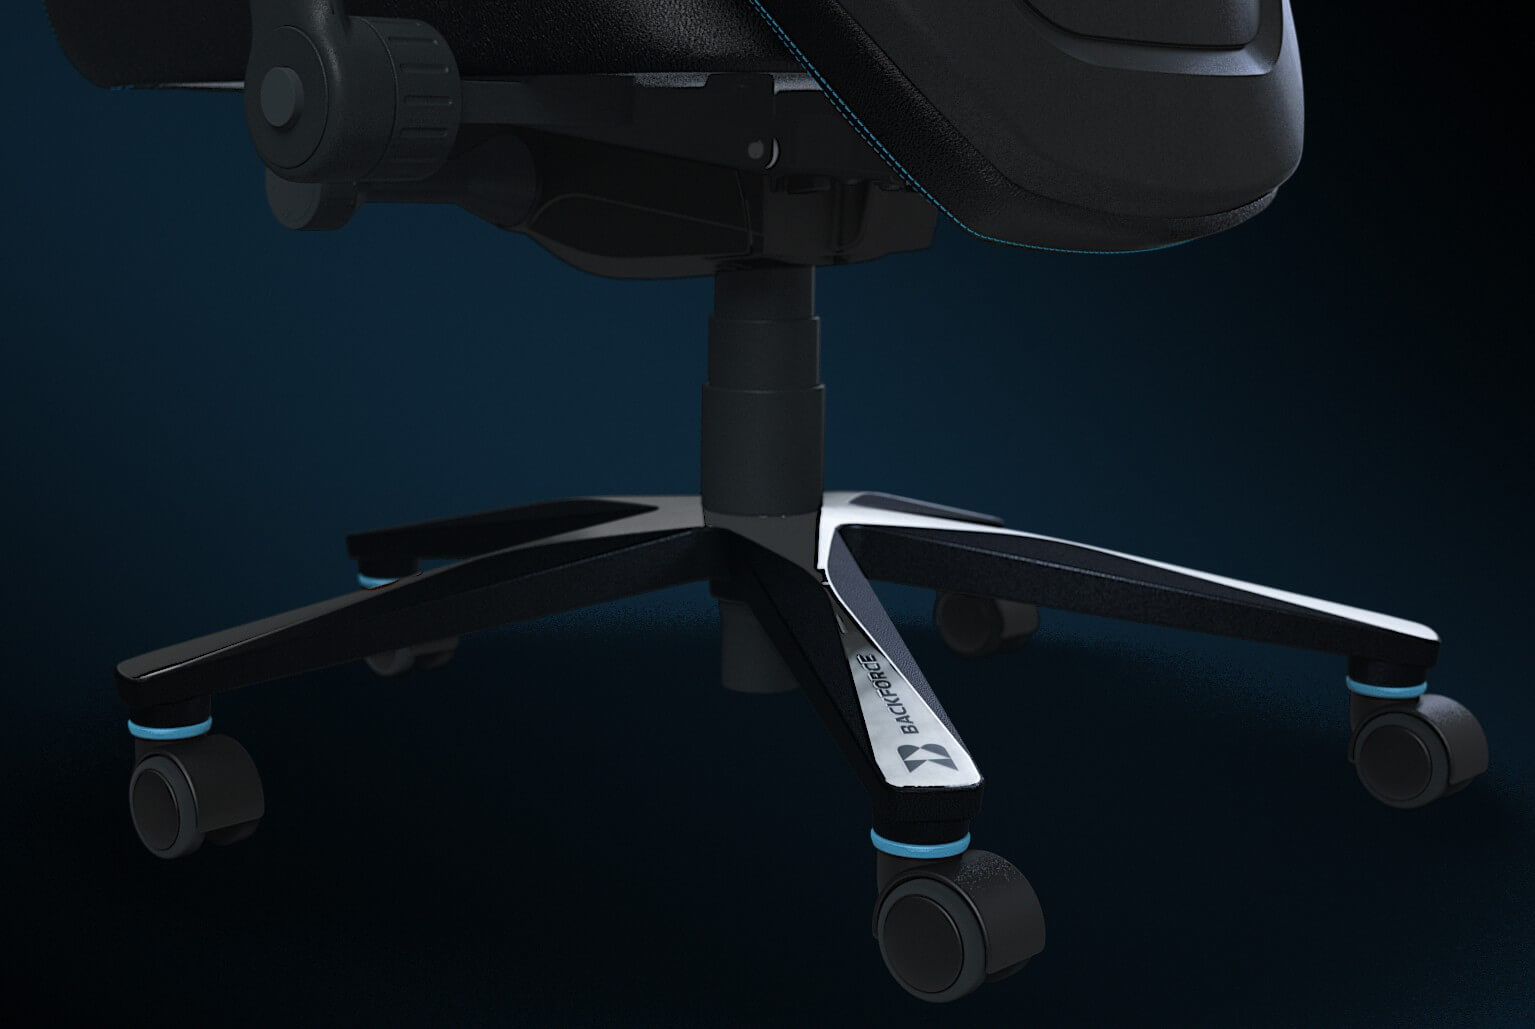 Gaming-Stuhl: Fußkreuz eines Gaming-Chairs